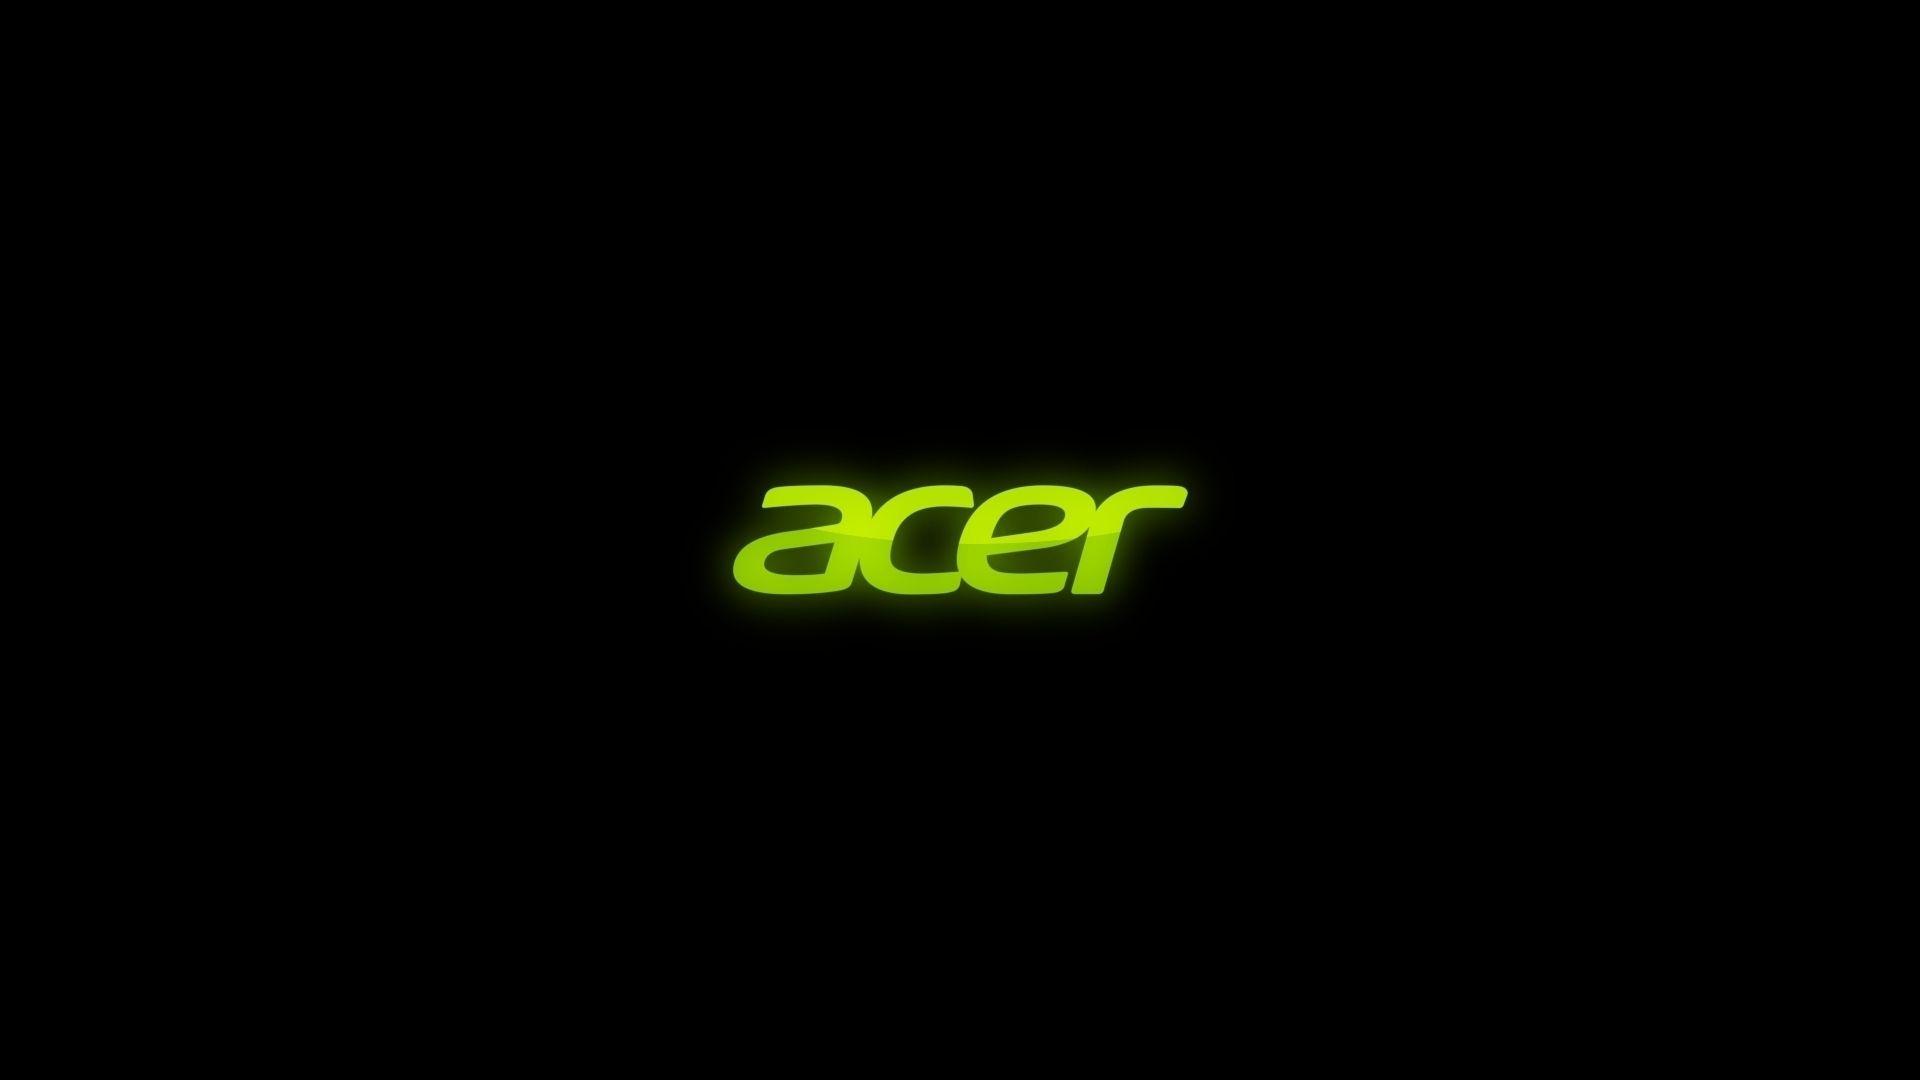 Acer Green Aspire Wallpaper Free Desktop Wallpaper Computers